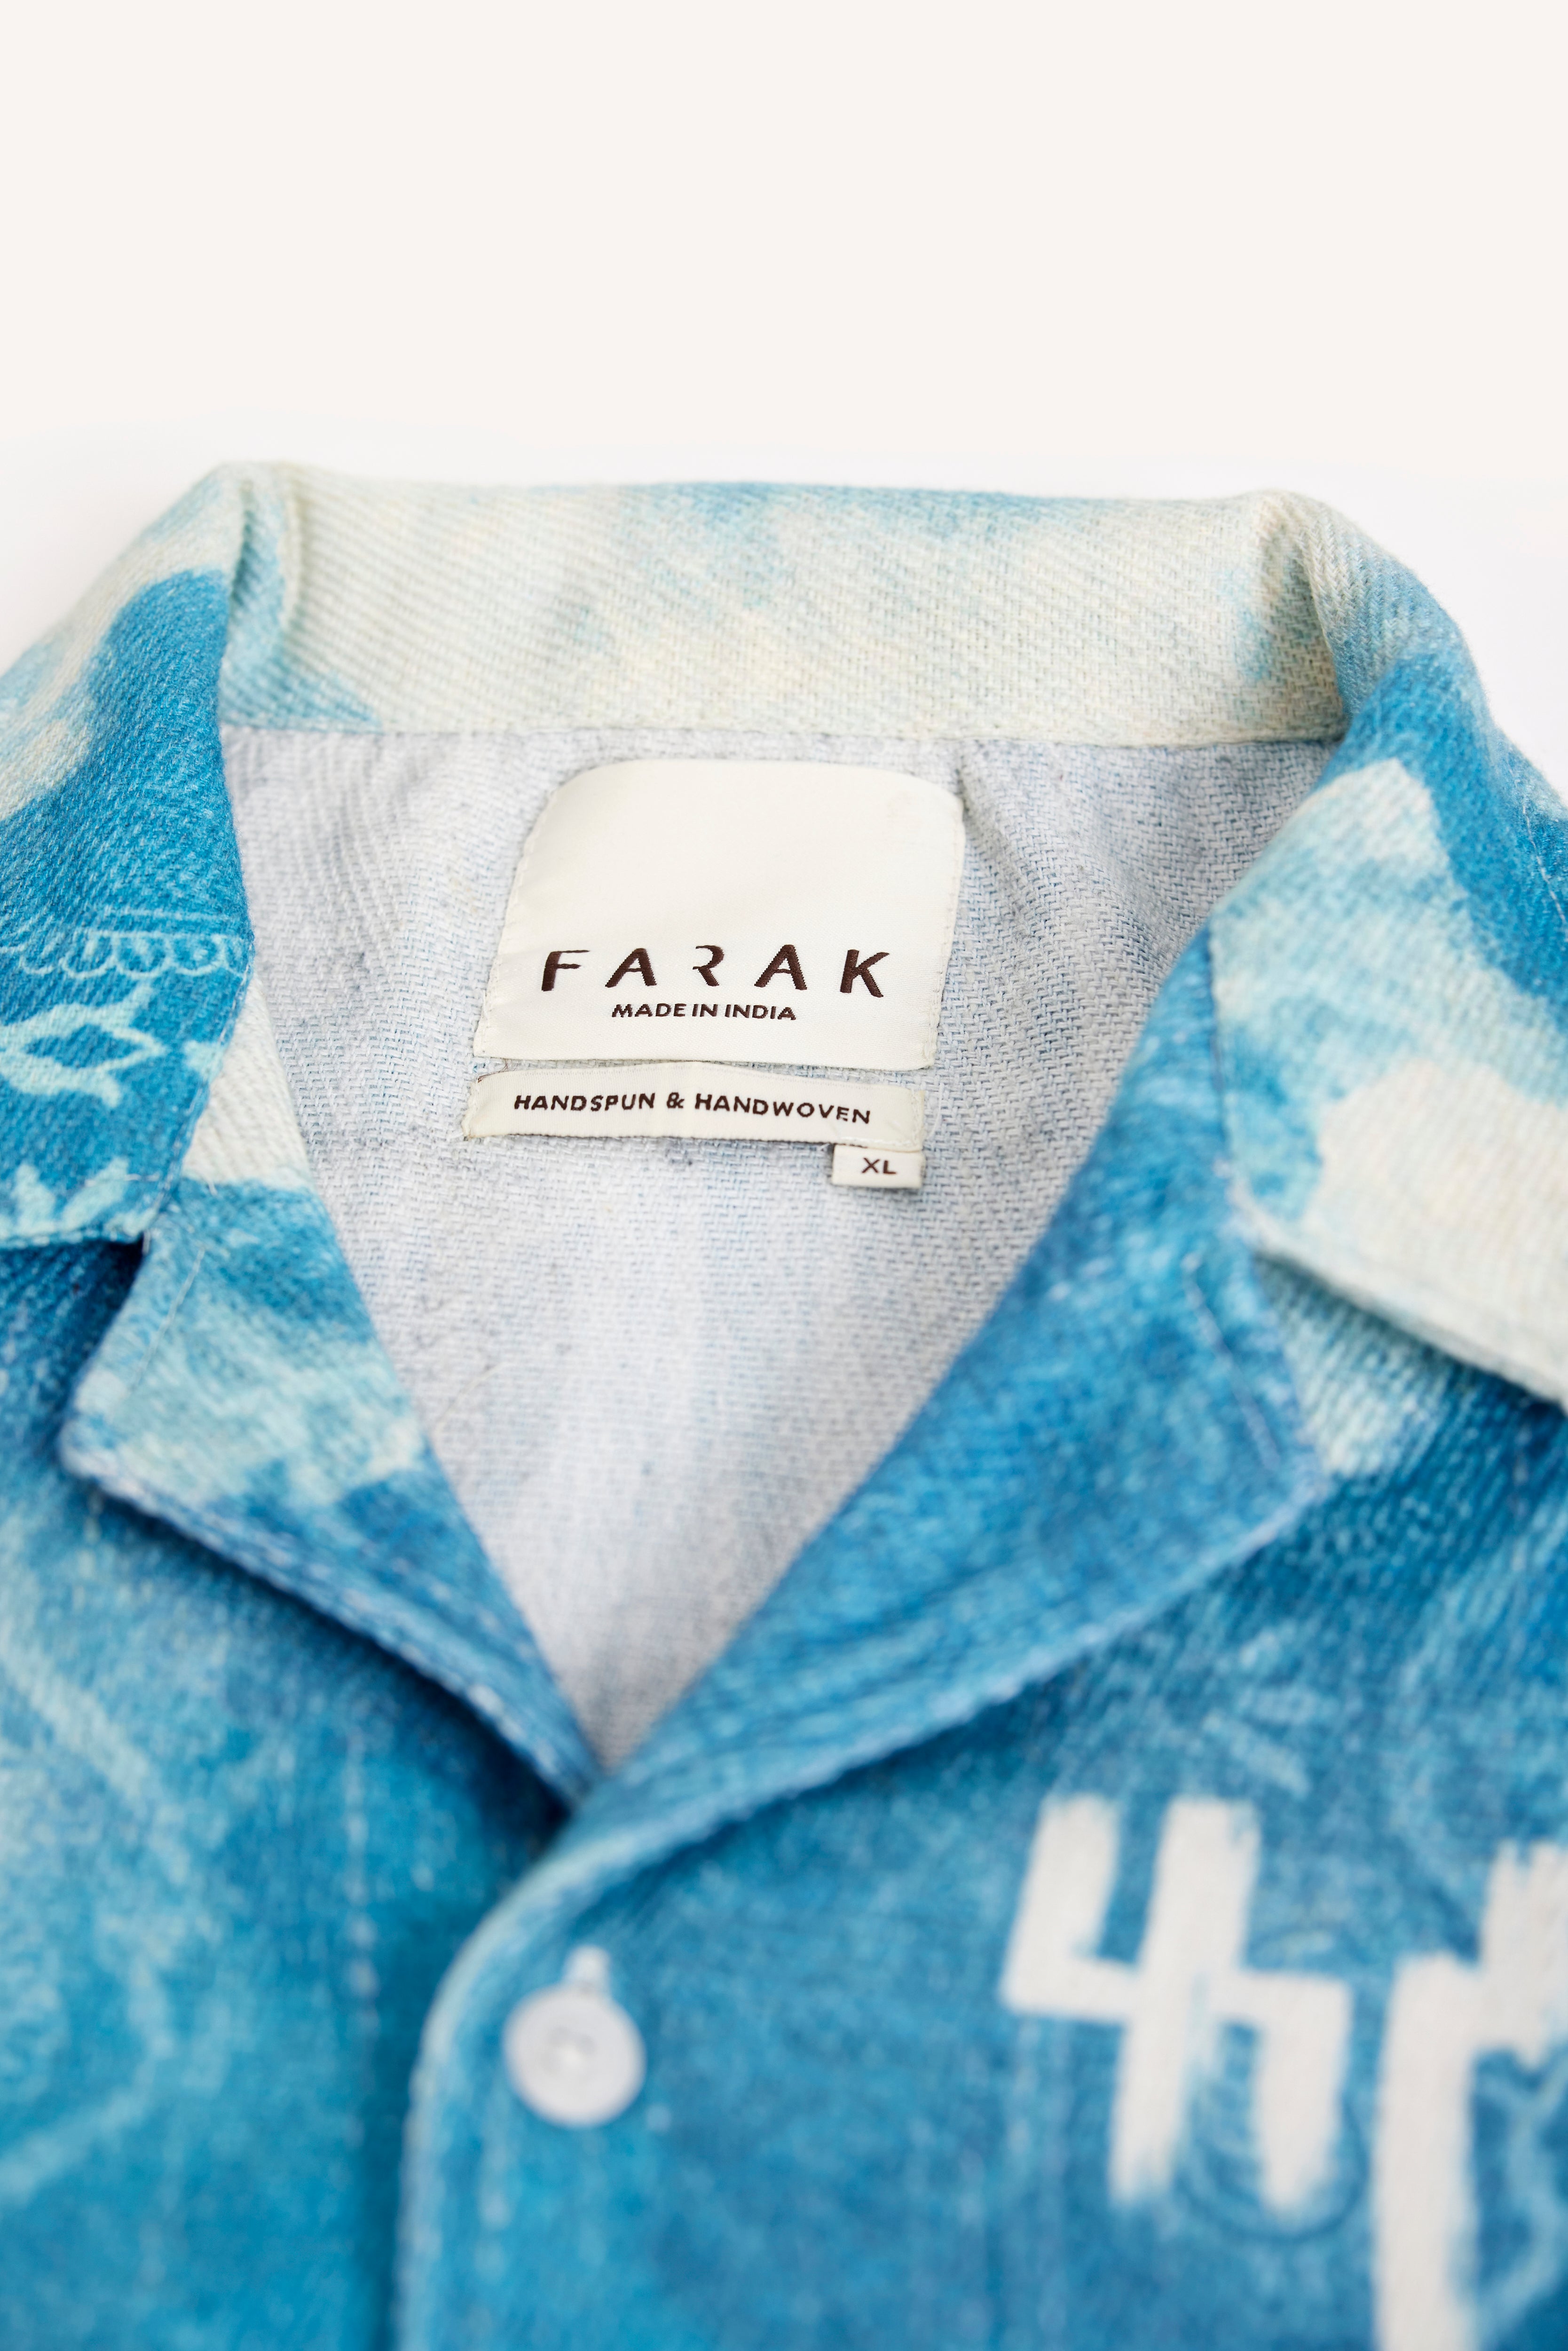 Babil Khan in FARAK: The Dichotomy Shirt